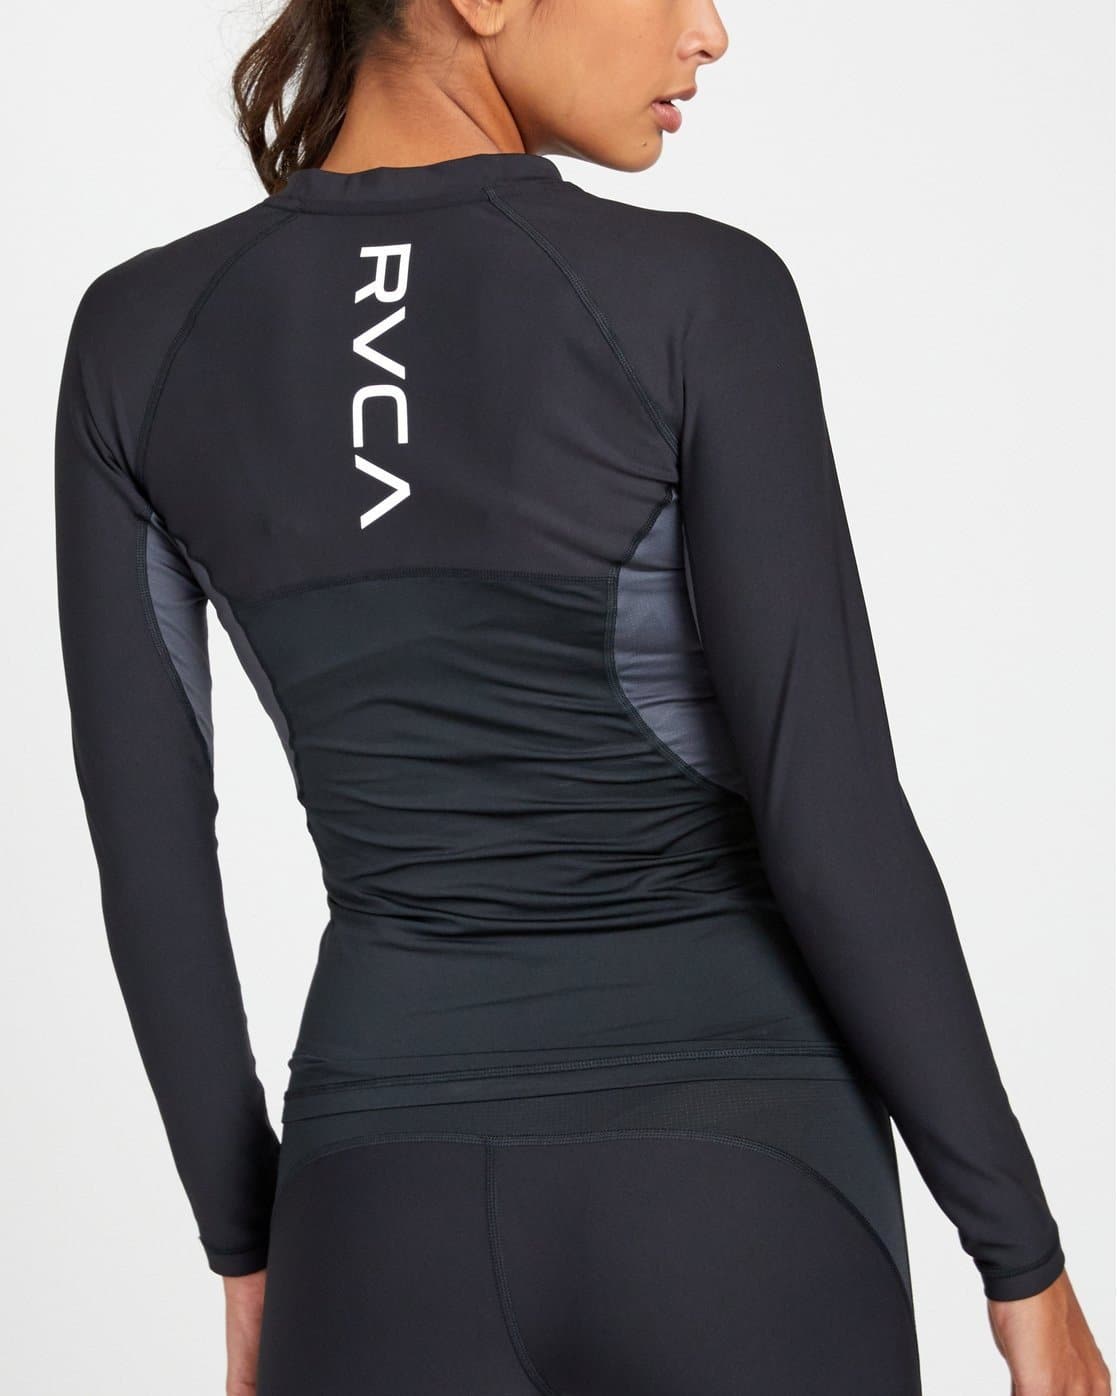 Rashguard va sport- long-sleeved compression t-shirt for women – StockBJJ